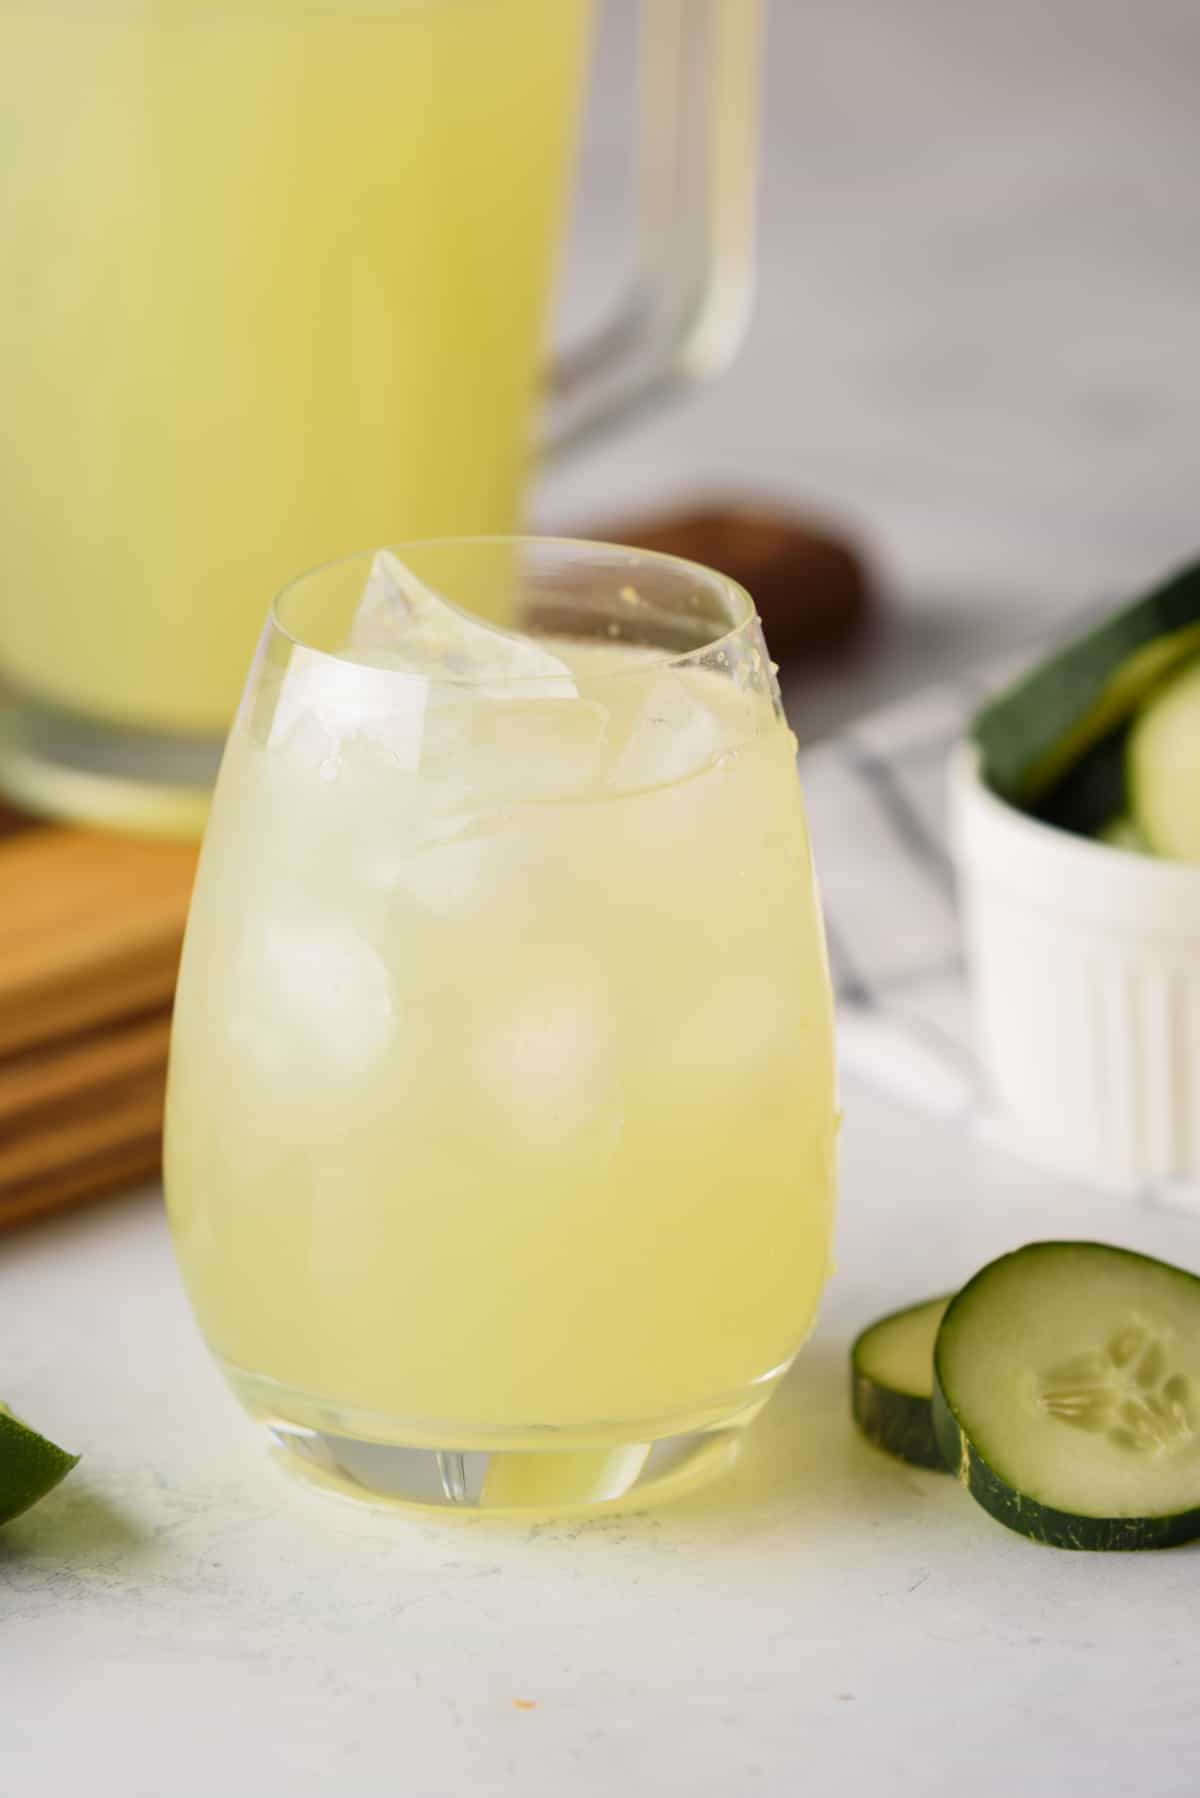 Agua de Pepino served in a glass next to cucumber slices.